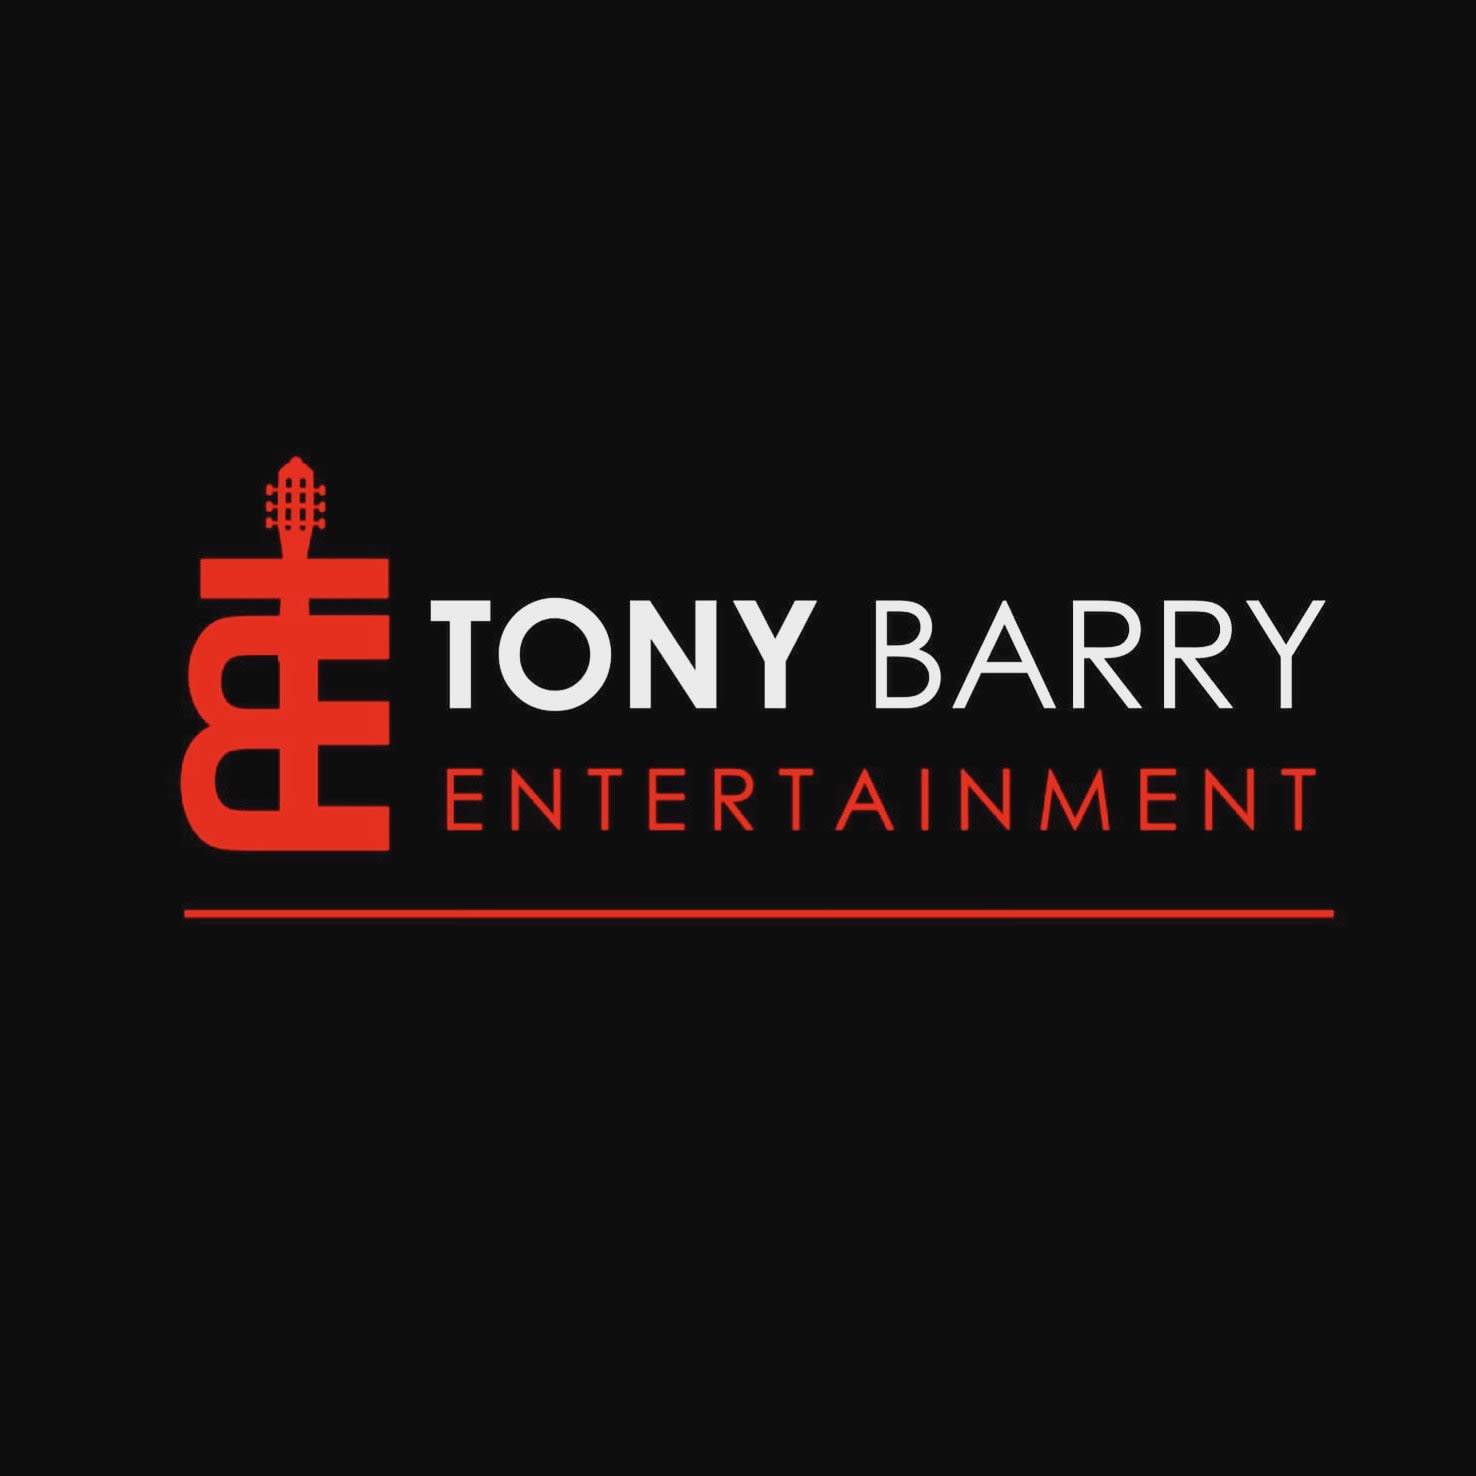 Tony Barry Entertainment